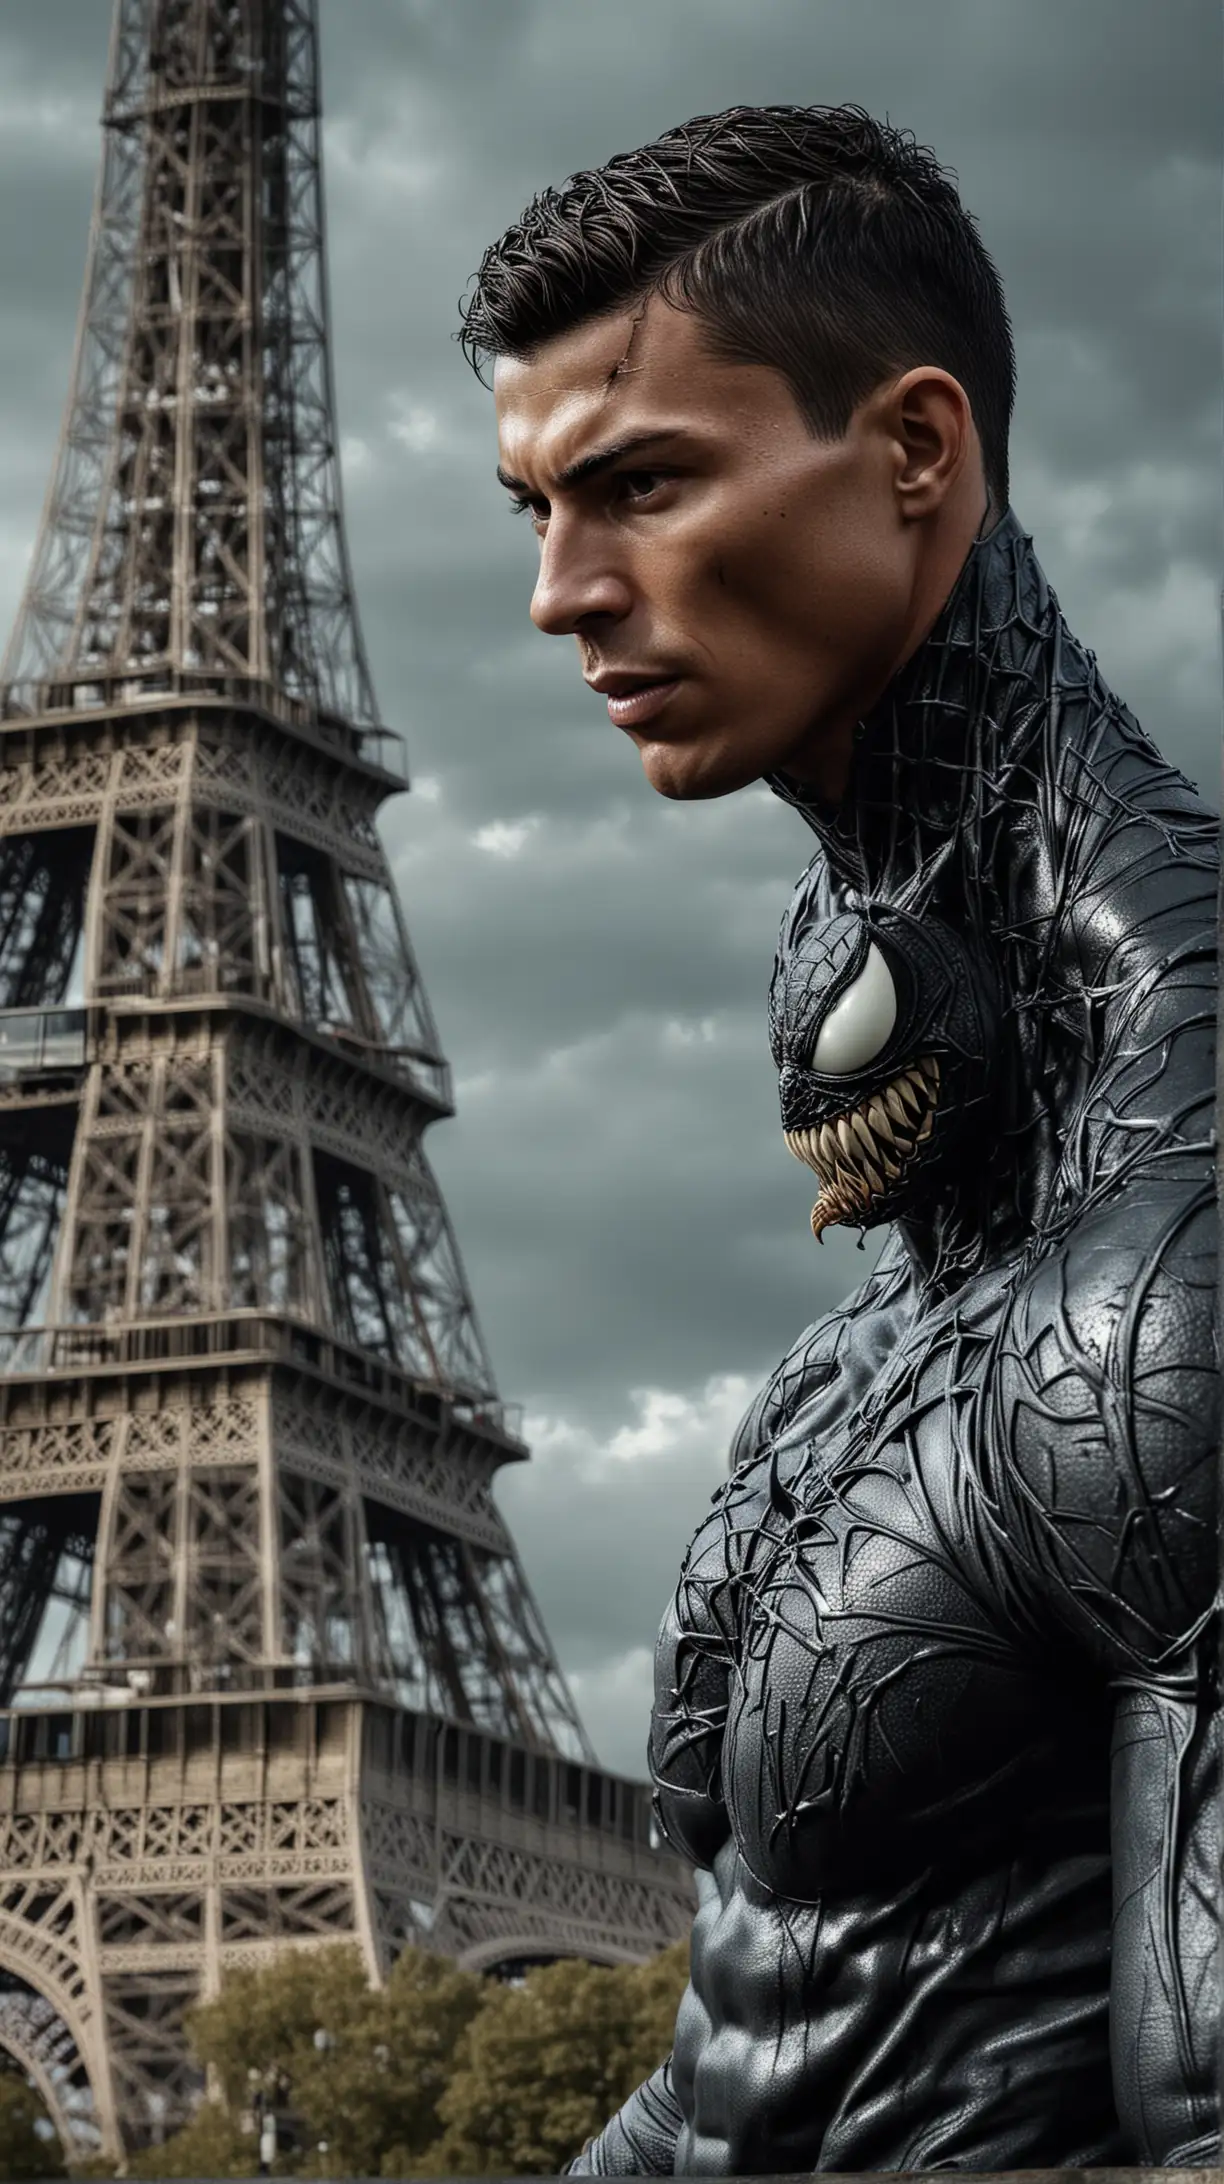 Cristiano Ronaldo as Venom, Ronaldo face, no mask, Eiffel tower in Paris background, very clear and 4k quality photo 